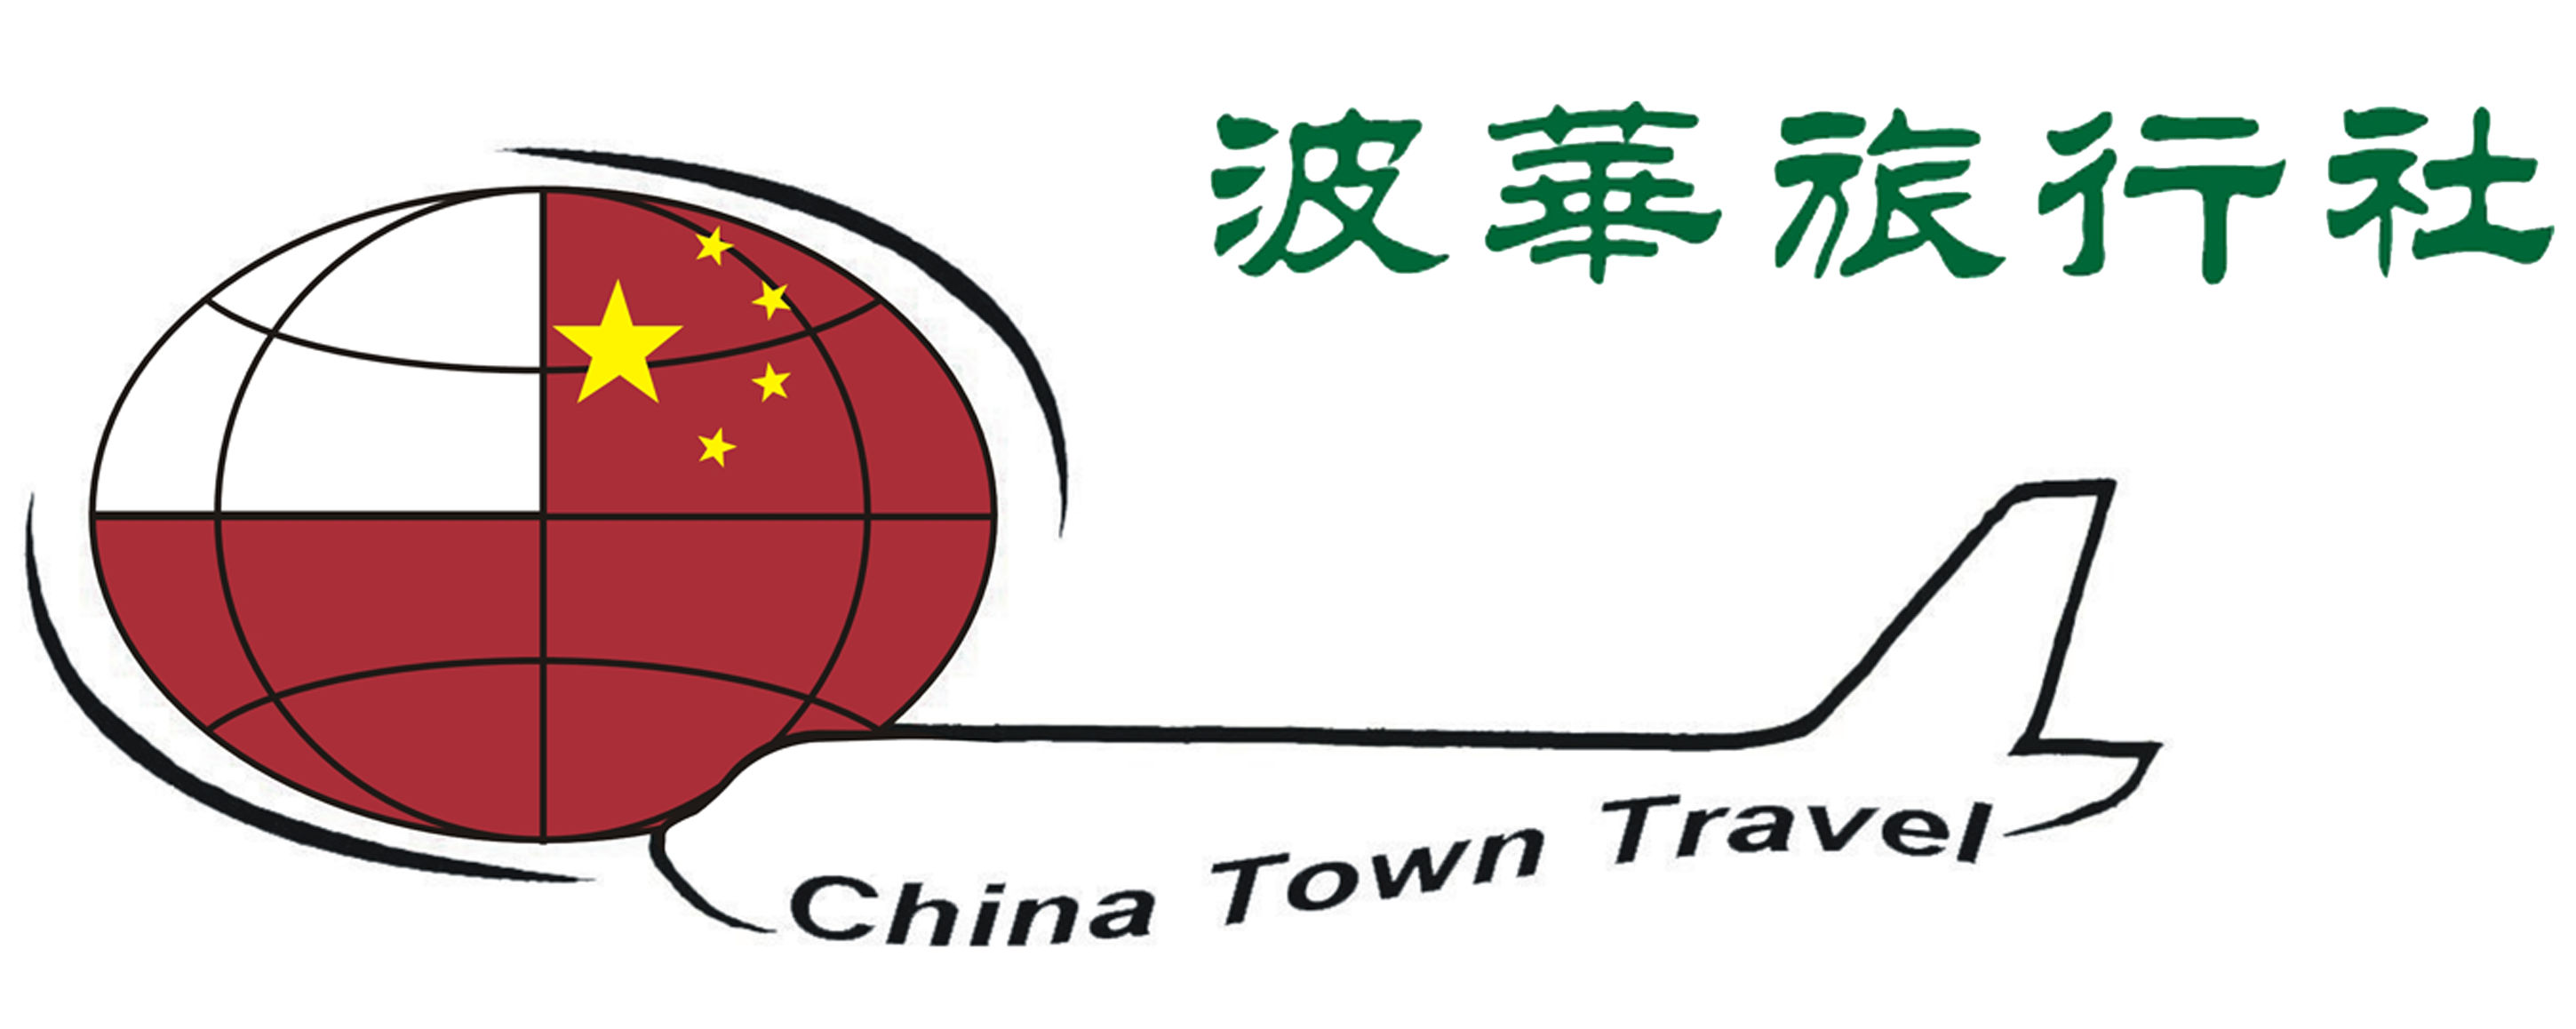 Biuro podrozy China Town Travel logo